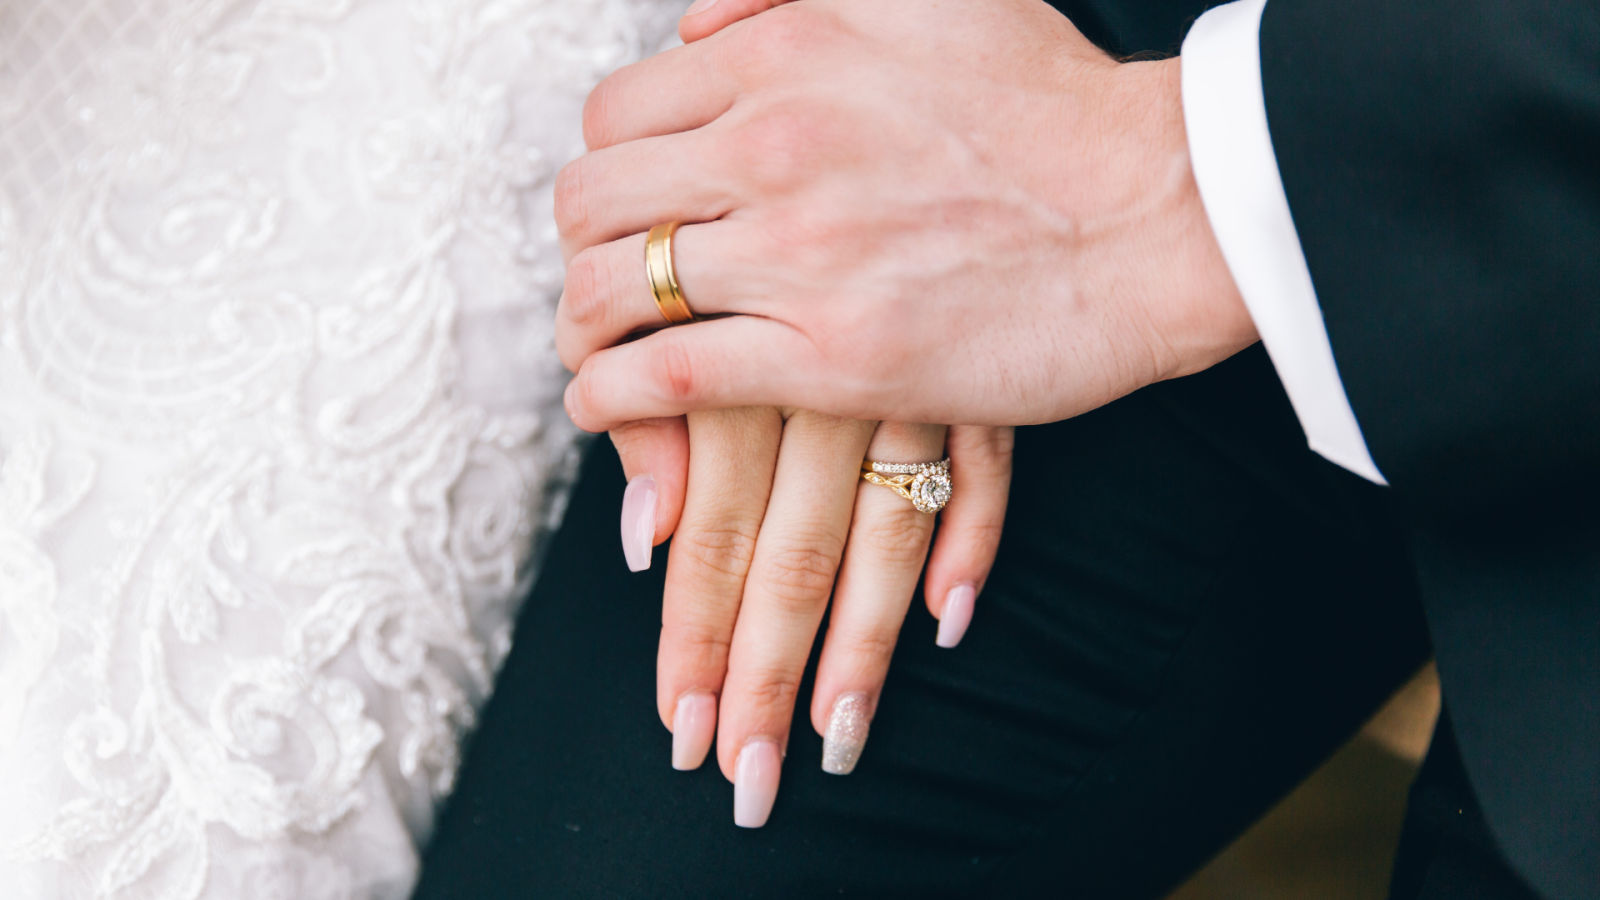 Weddingengagement rings images for wedding planning